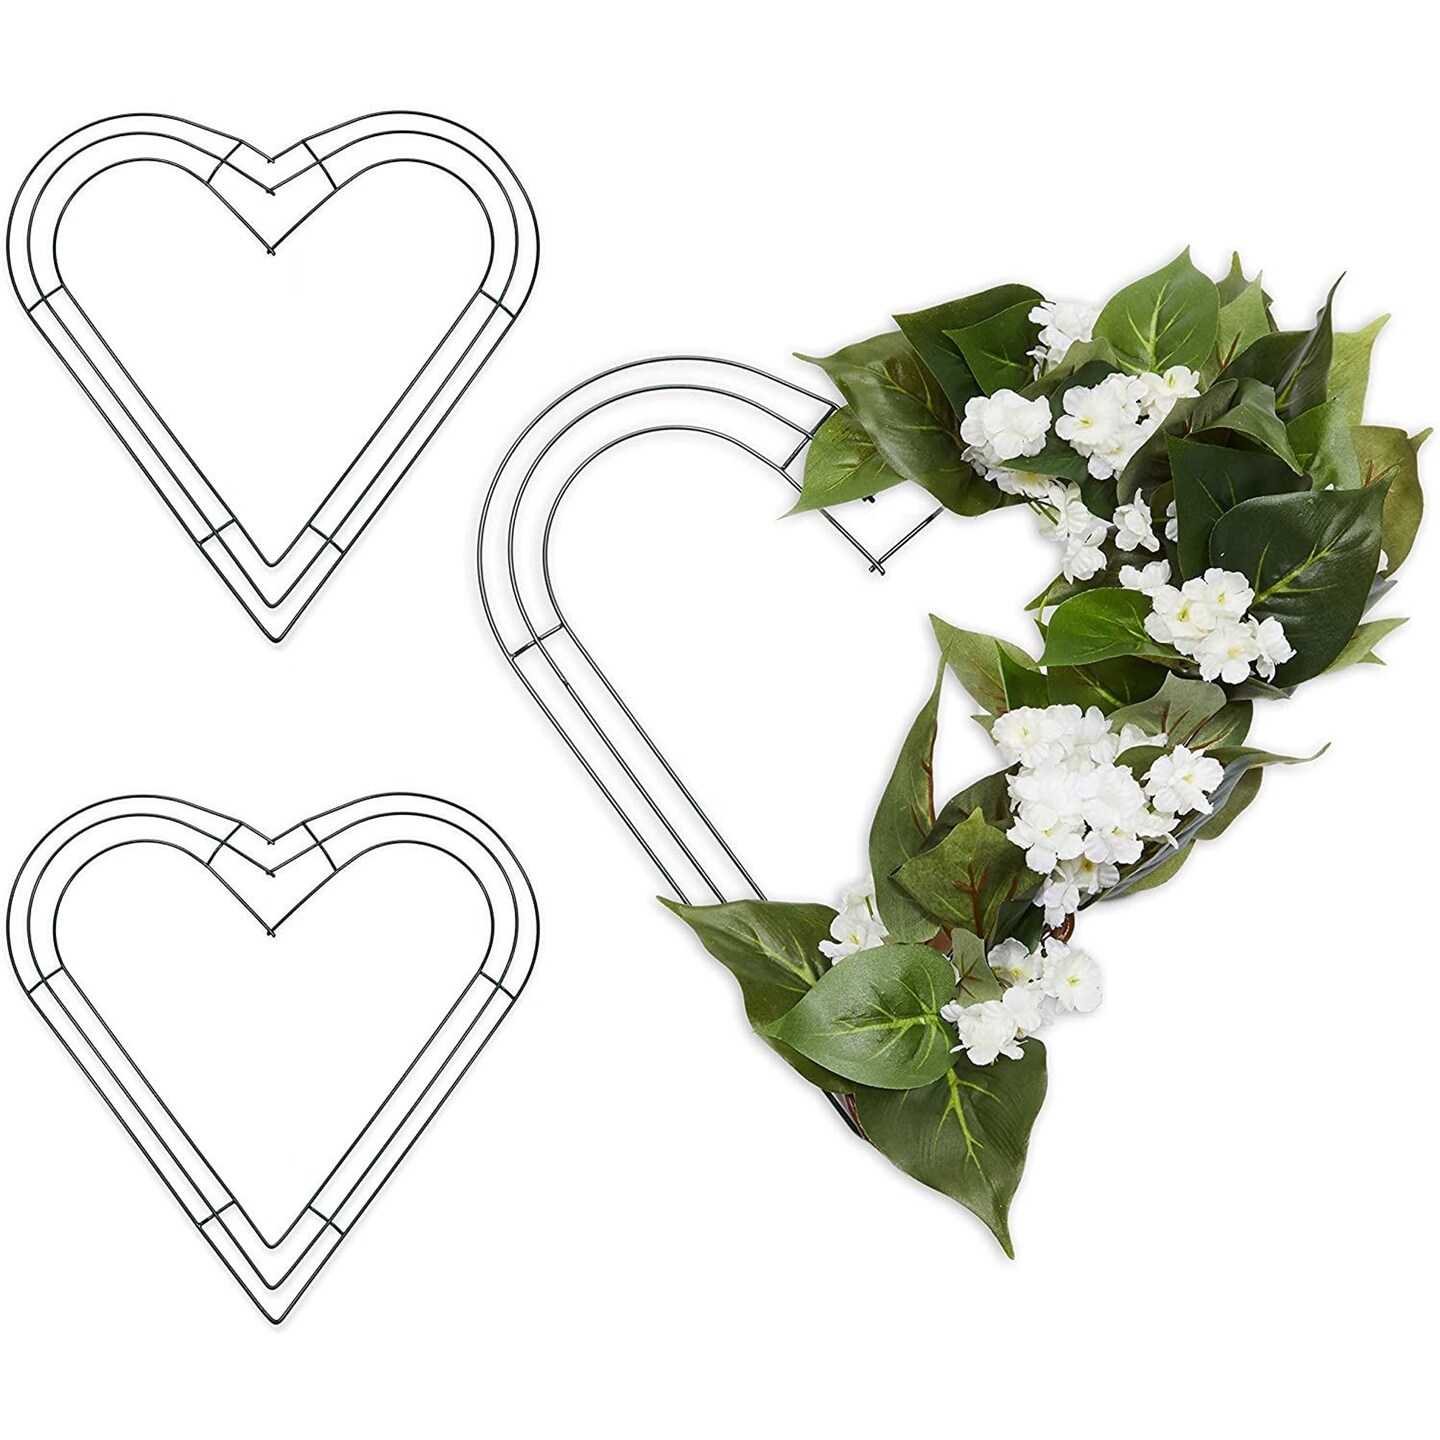 Orchip Metal Wreath Frame, Star/Heart/Moon/Triangle Wire Wreath Frames for DIY Wedding Spring or Garden Wreath, 8pcs/set, Silver